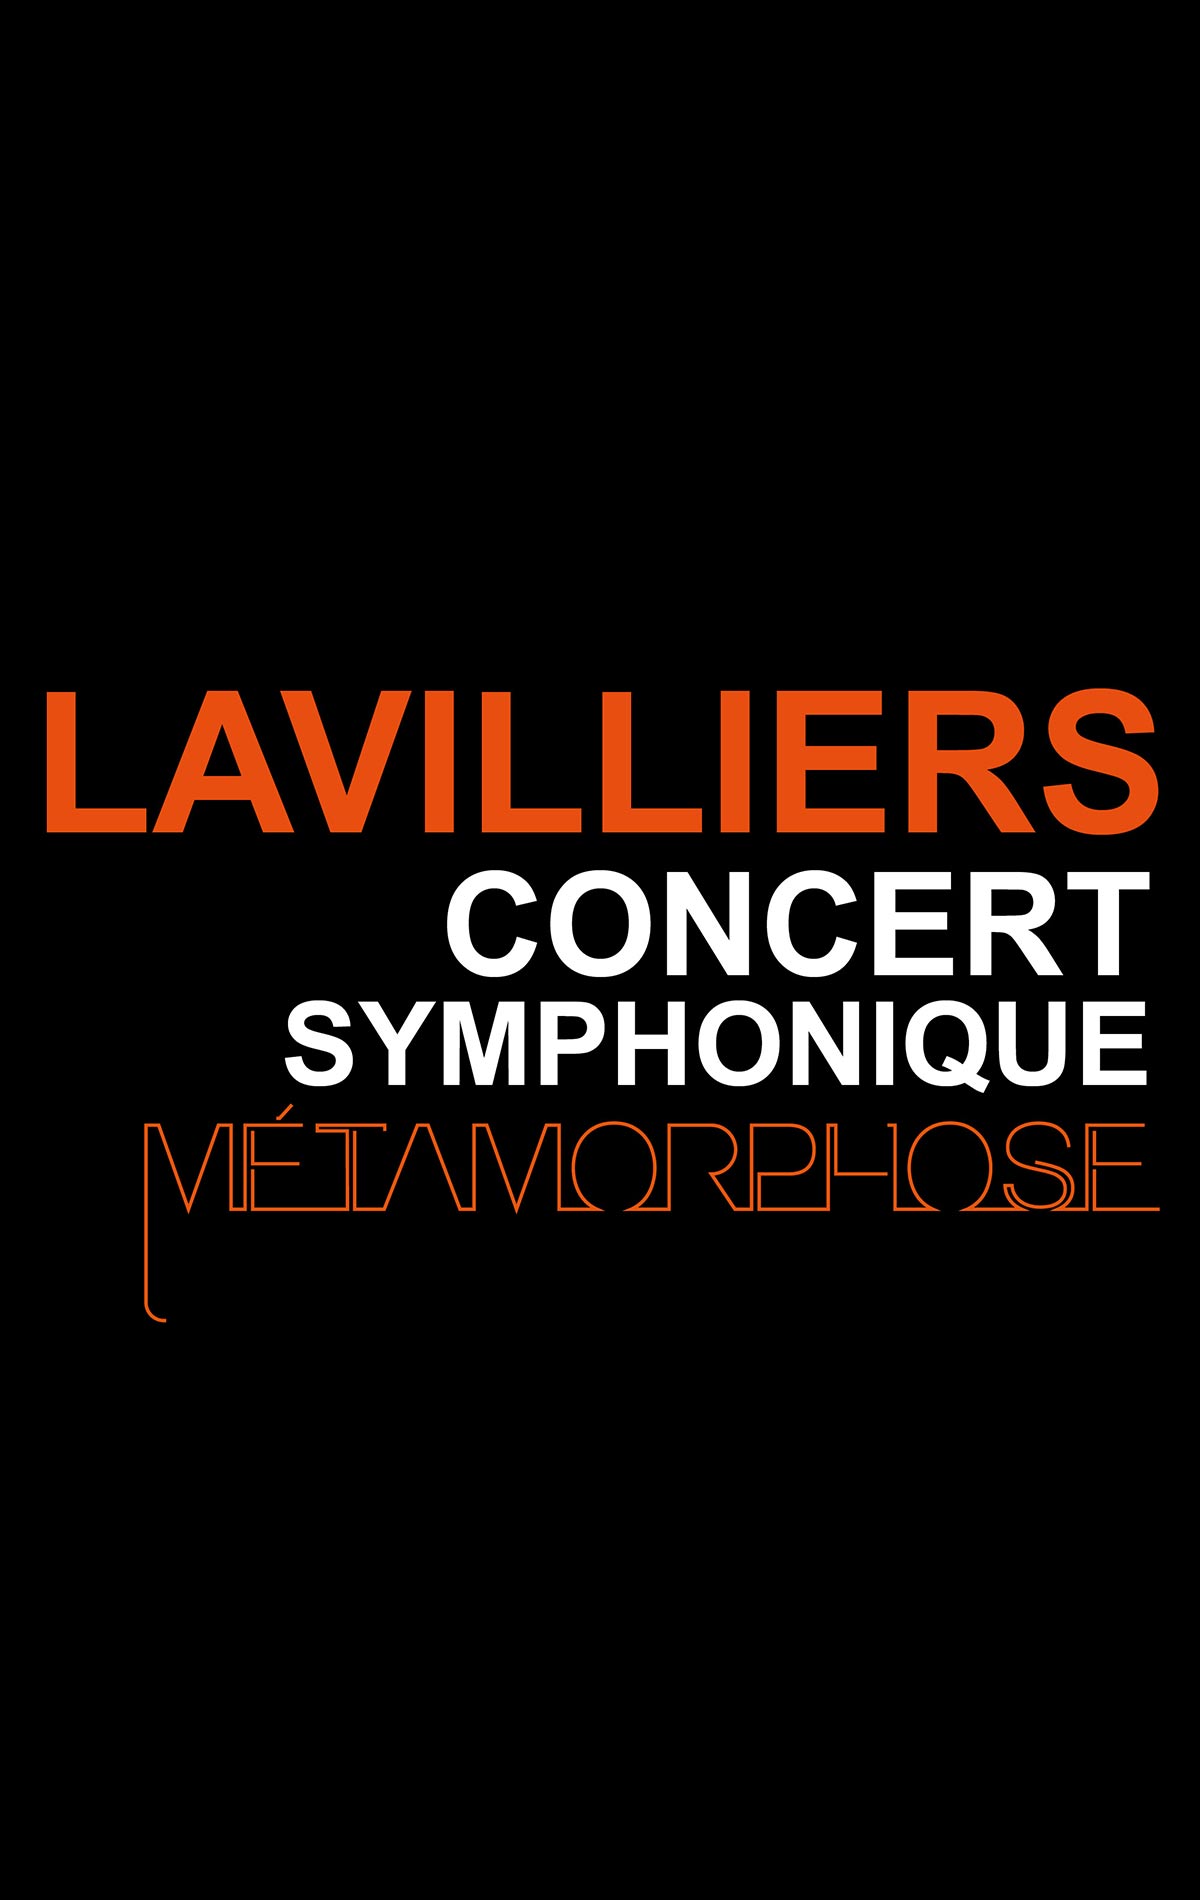 Bernard Lavilliers in der Nouveau Siècle Tickets